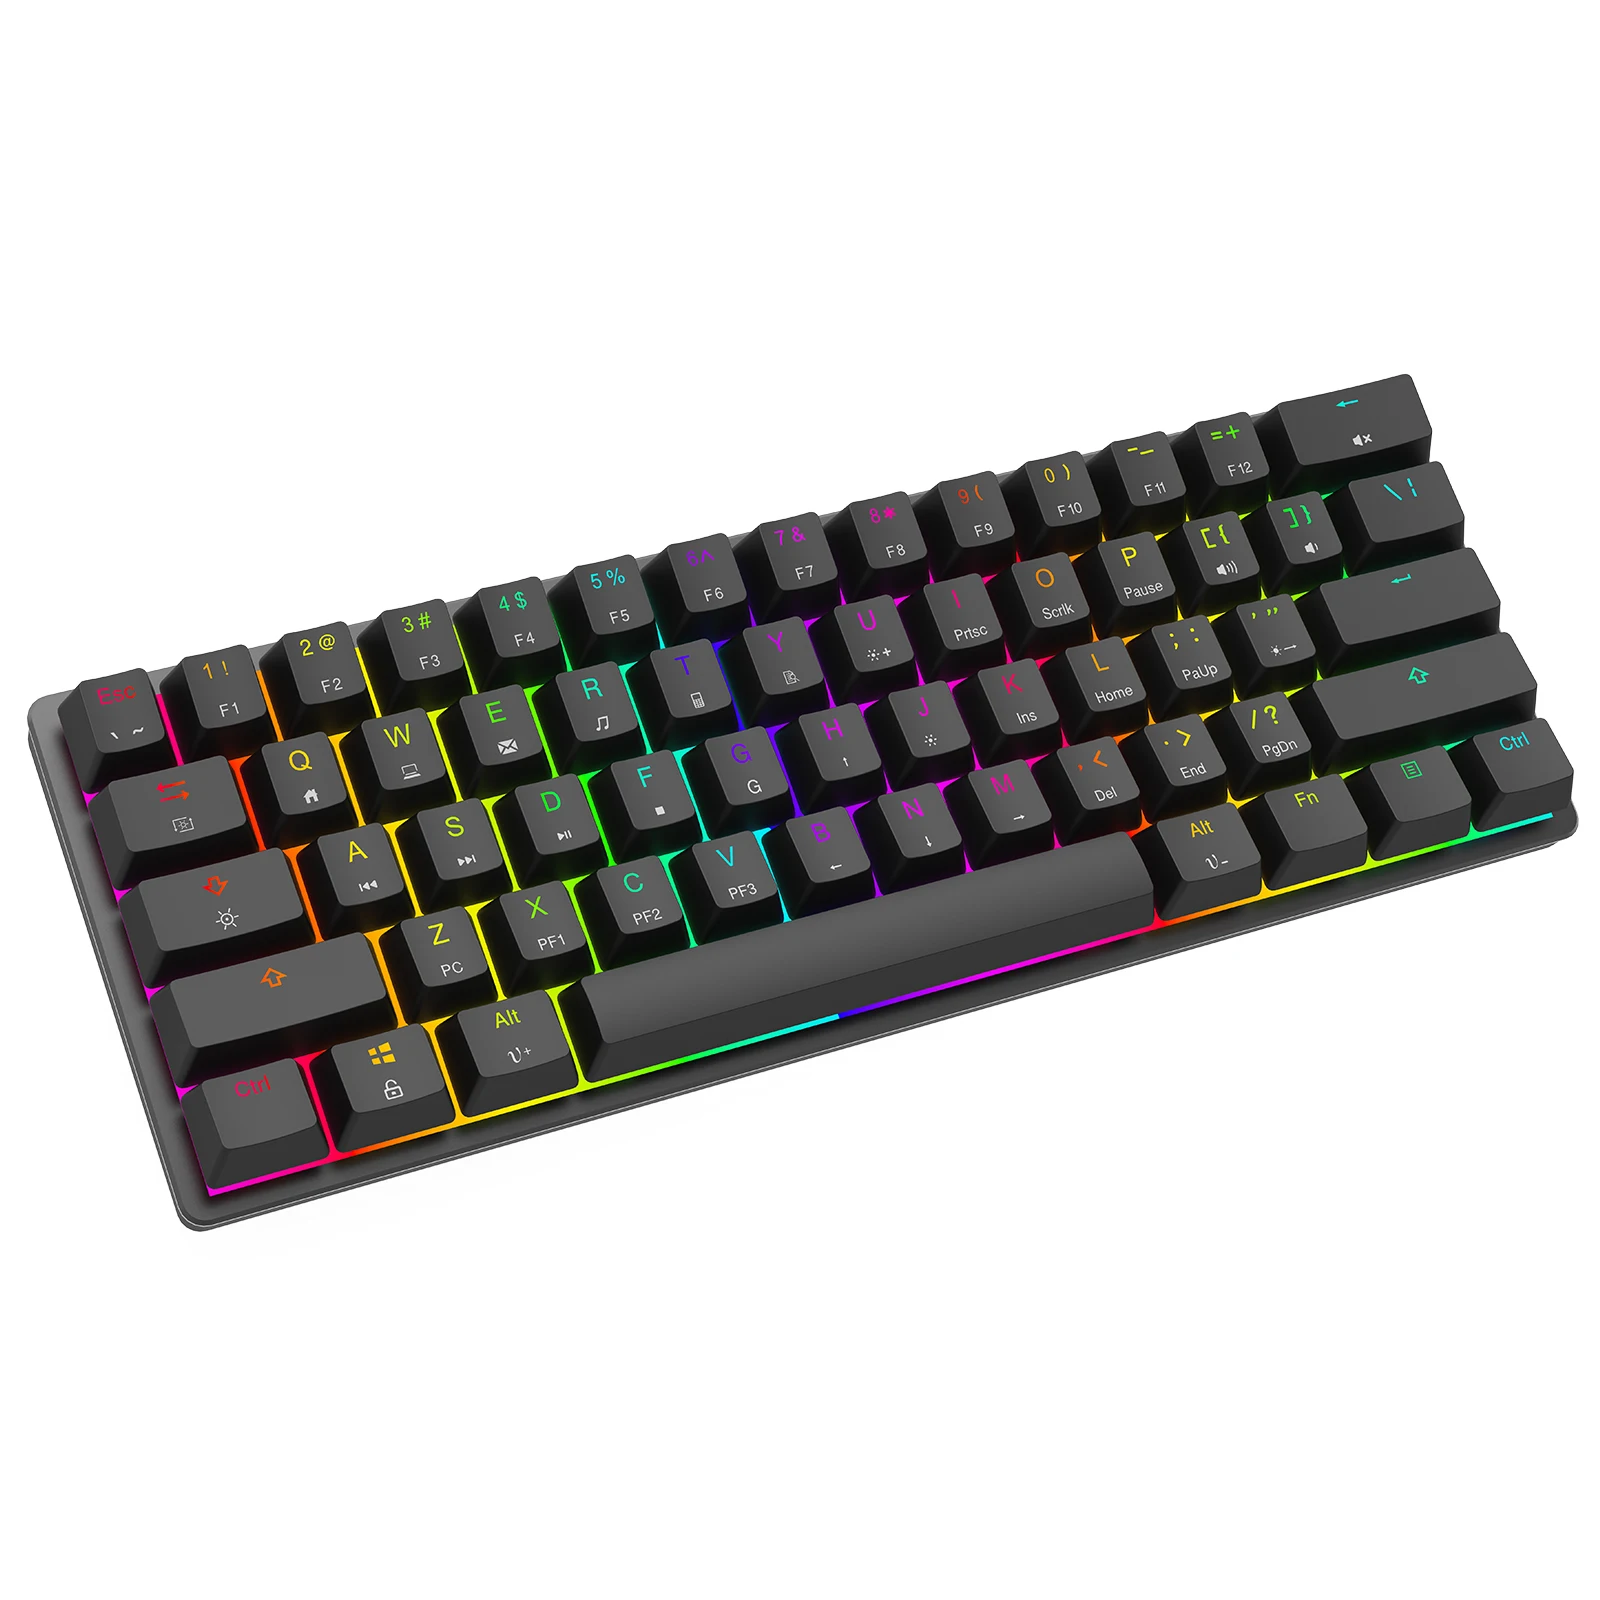 

Amazon hotsale 60% mechanical keyboard 61 keys suspended pbt keycaps type c wired gaming mechanical keyboard, Black white